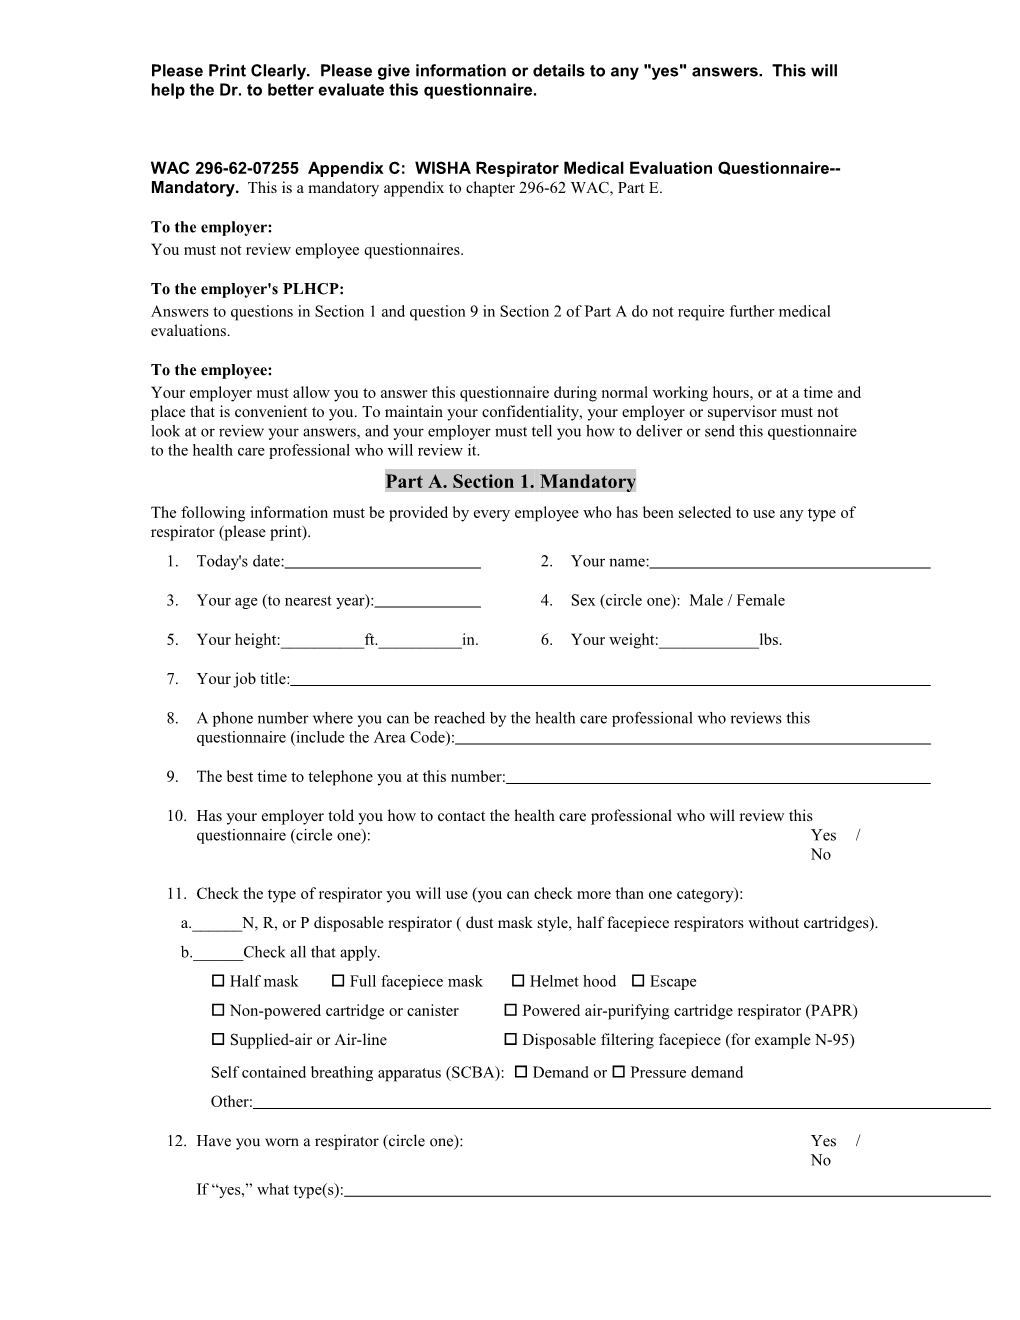 WAC 296-62-07255 Appendix C: WISHA Respirator Medical Evaluation Questionnaire Mandatory